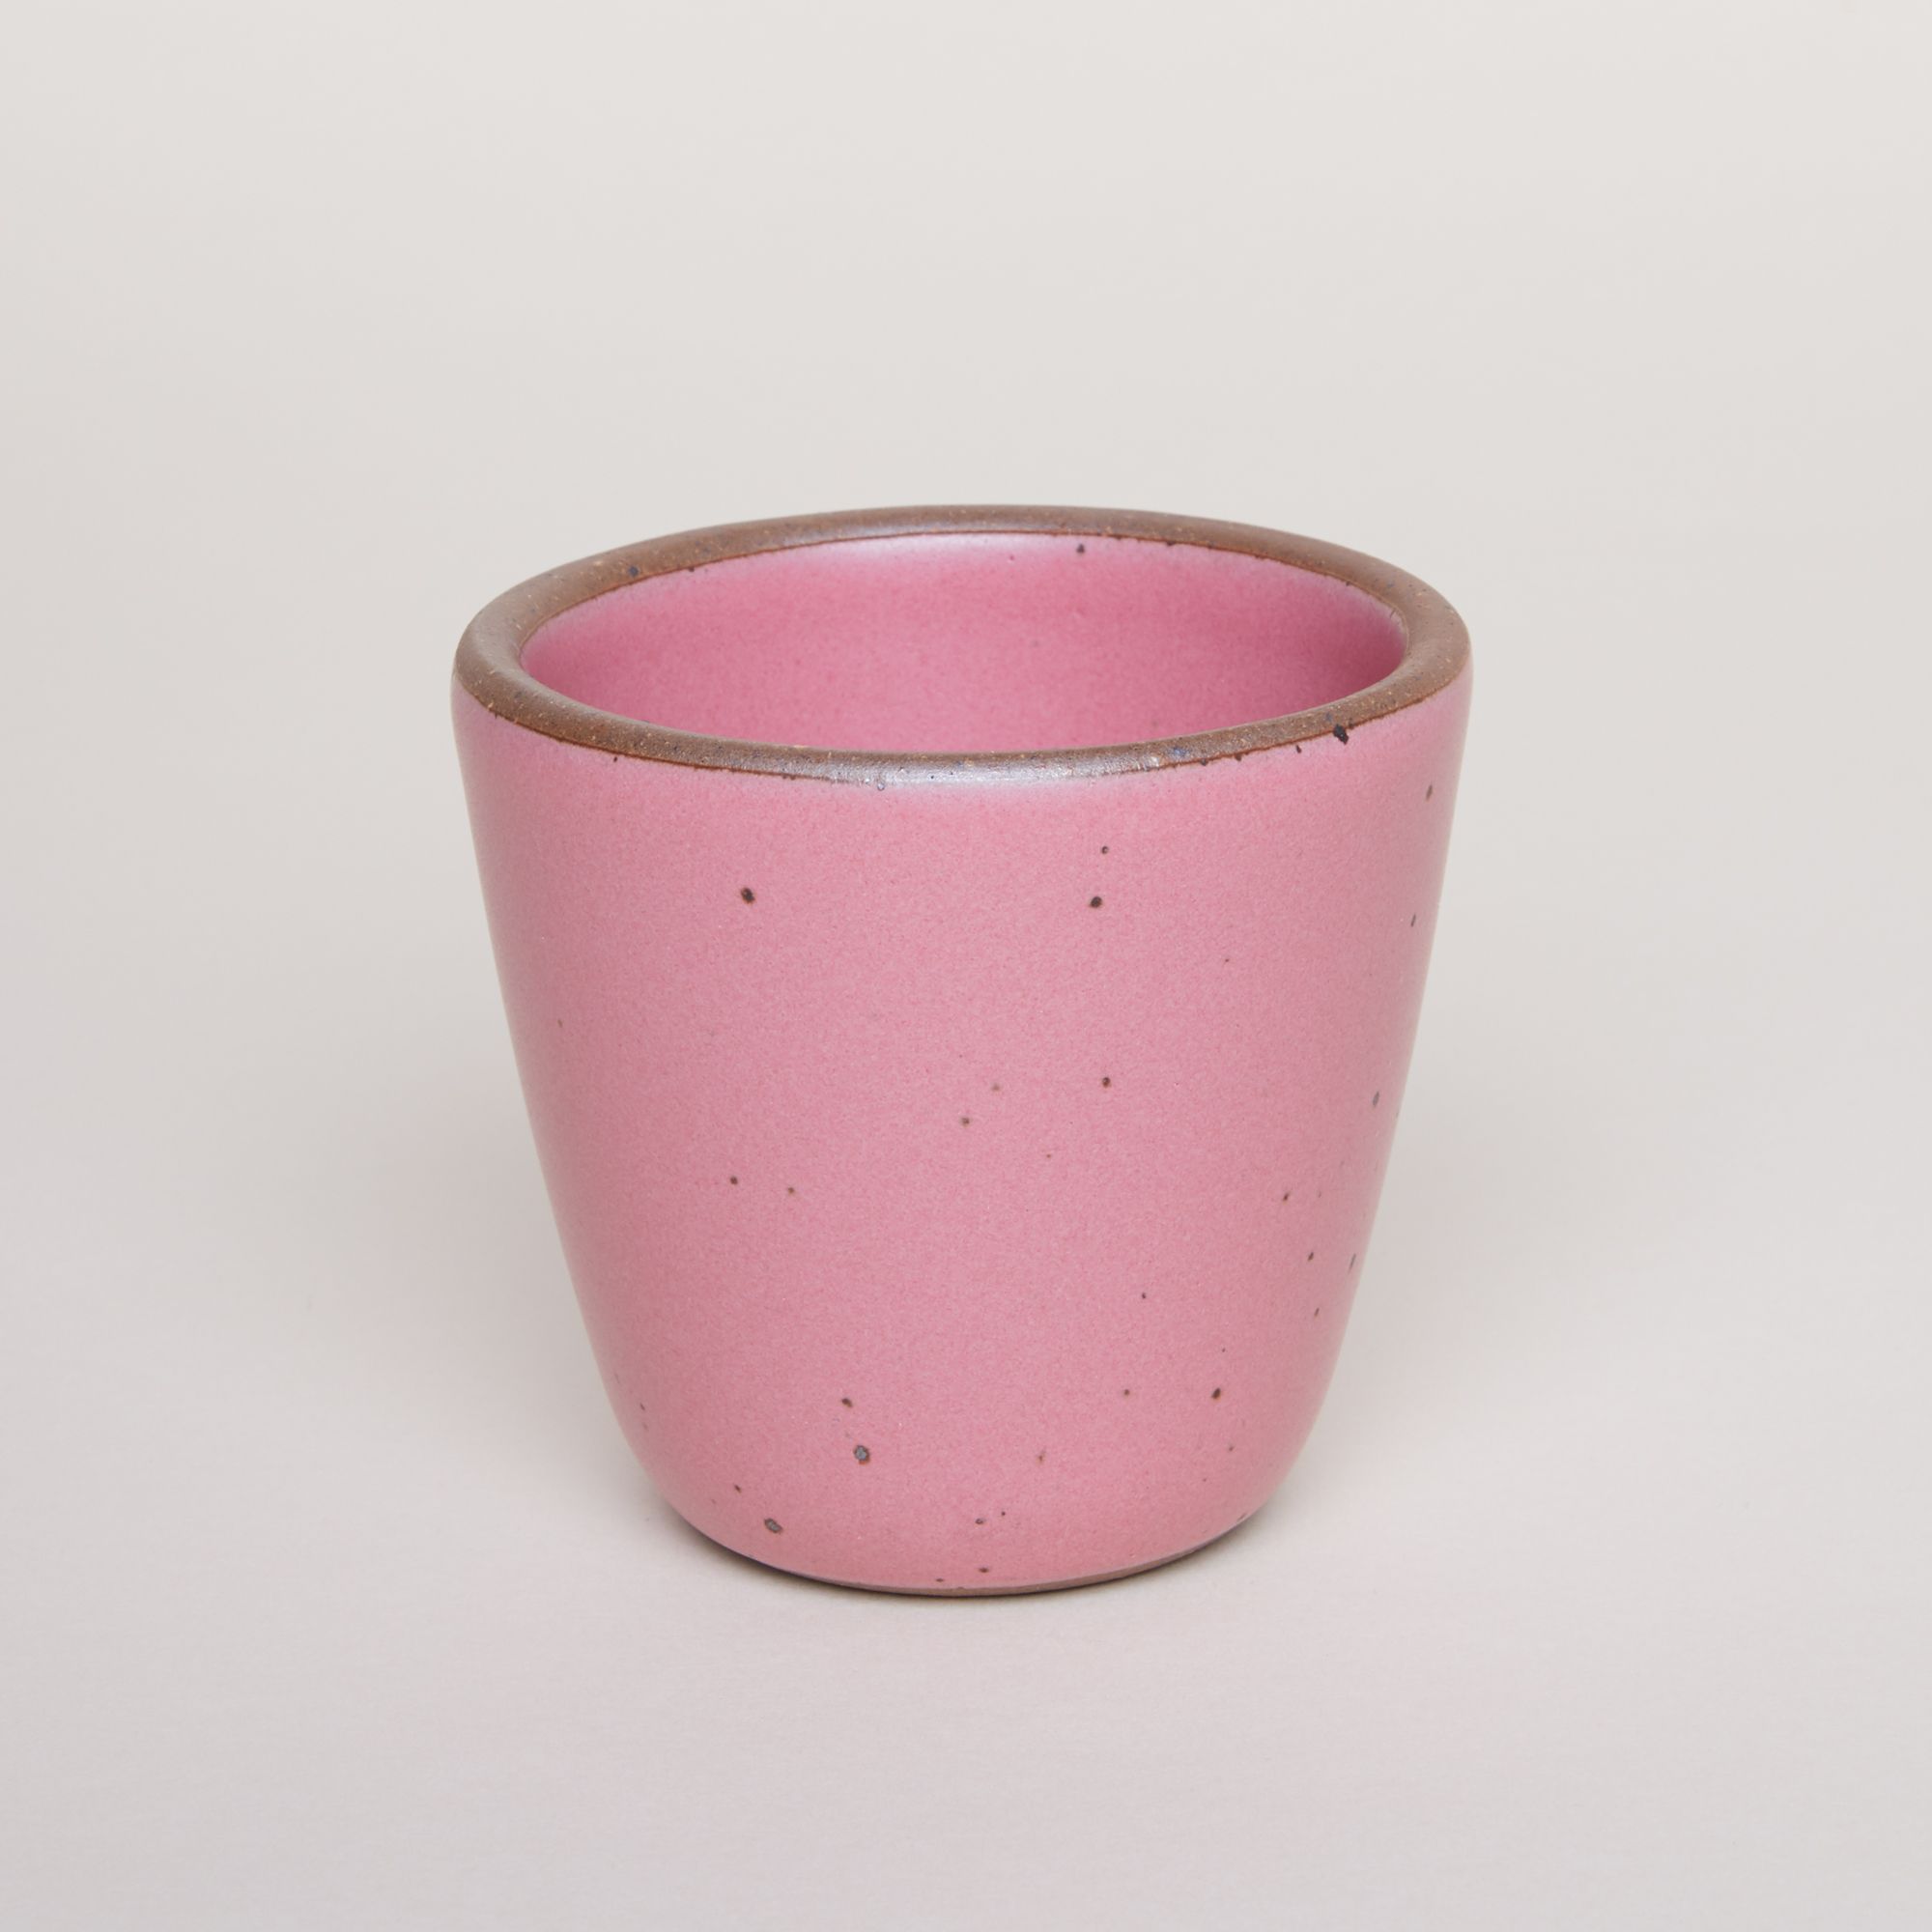 A bright pink handleless mug